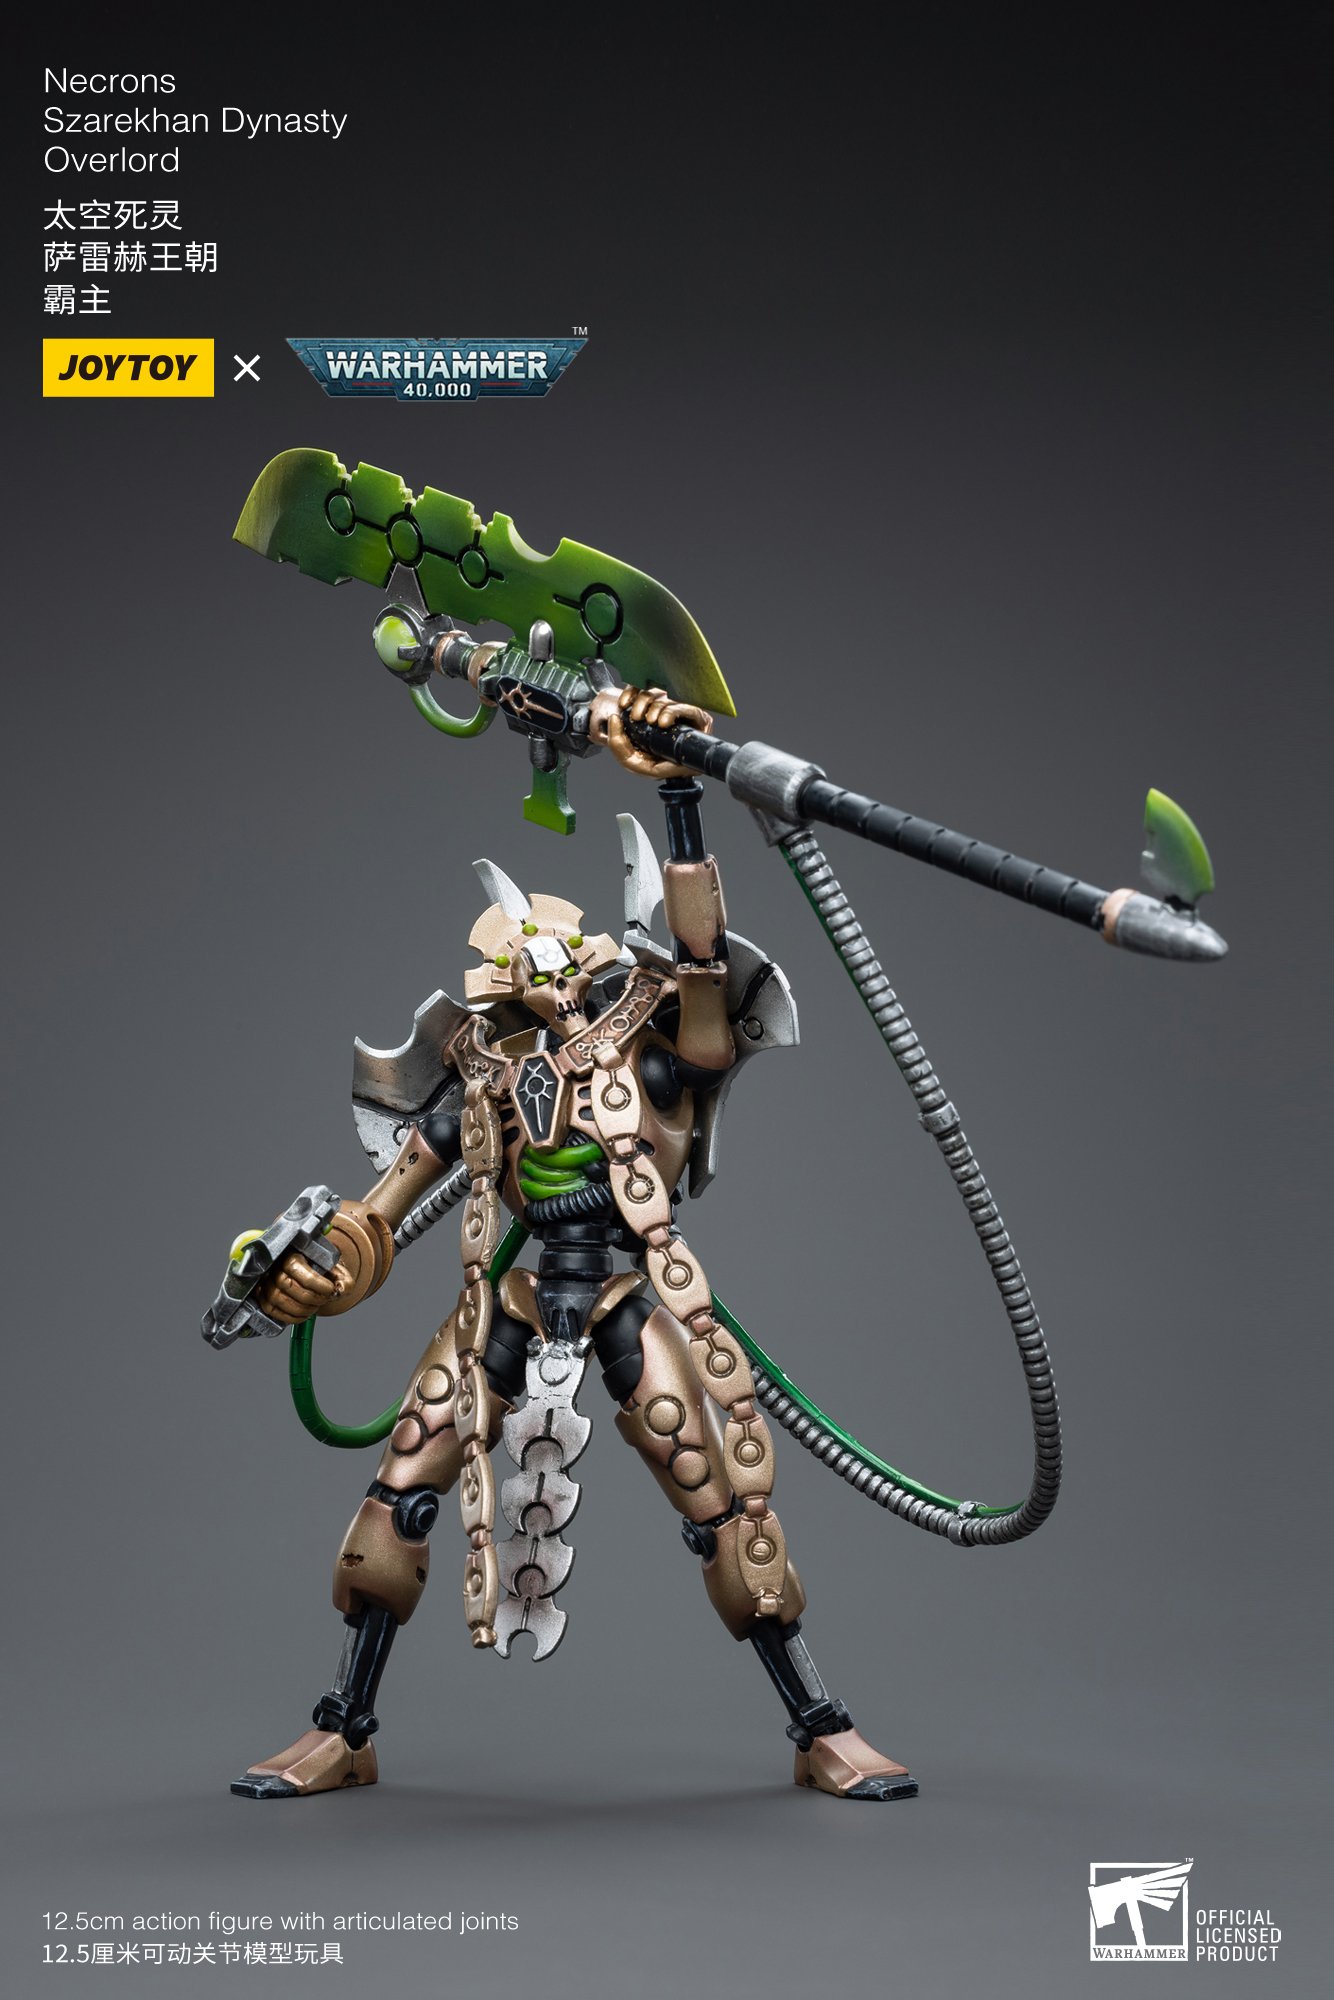 JoyToy Action Figure Warhammer 40K Necrons Szarekhan Dynasty Overlord